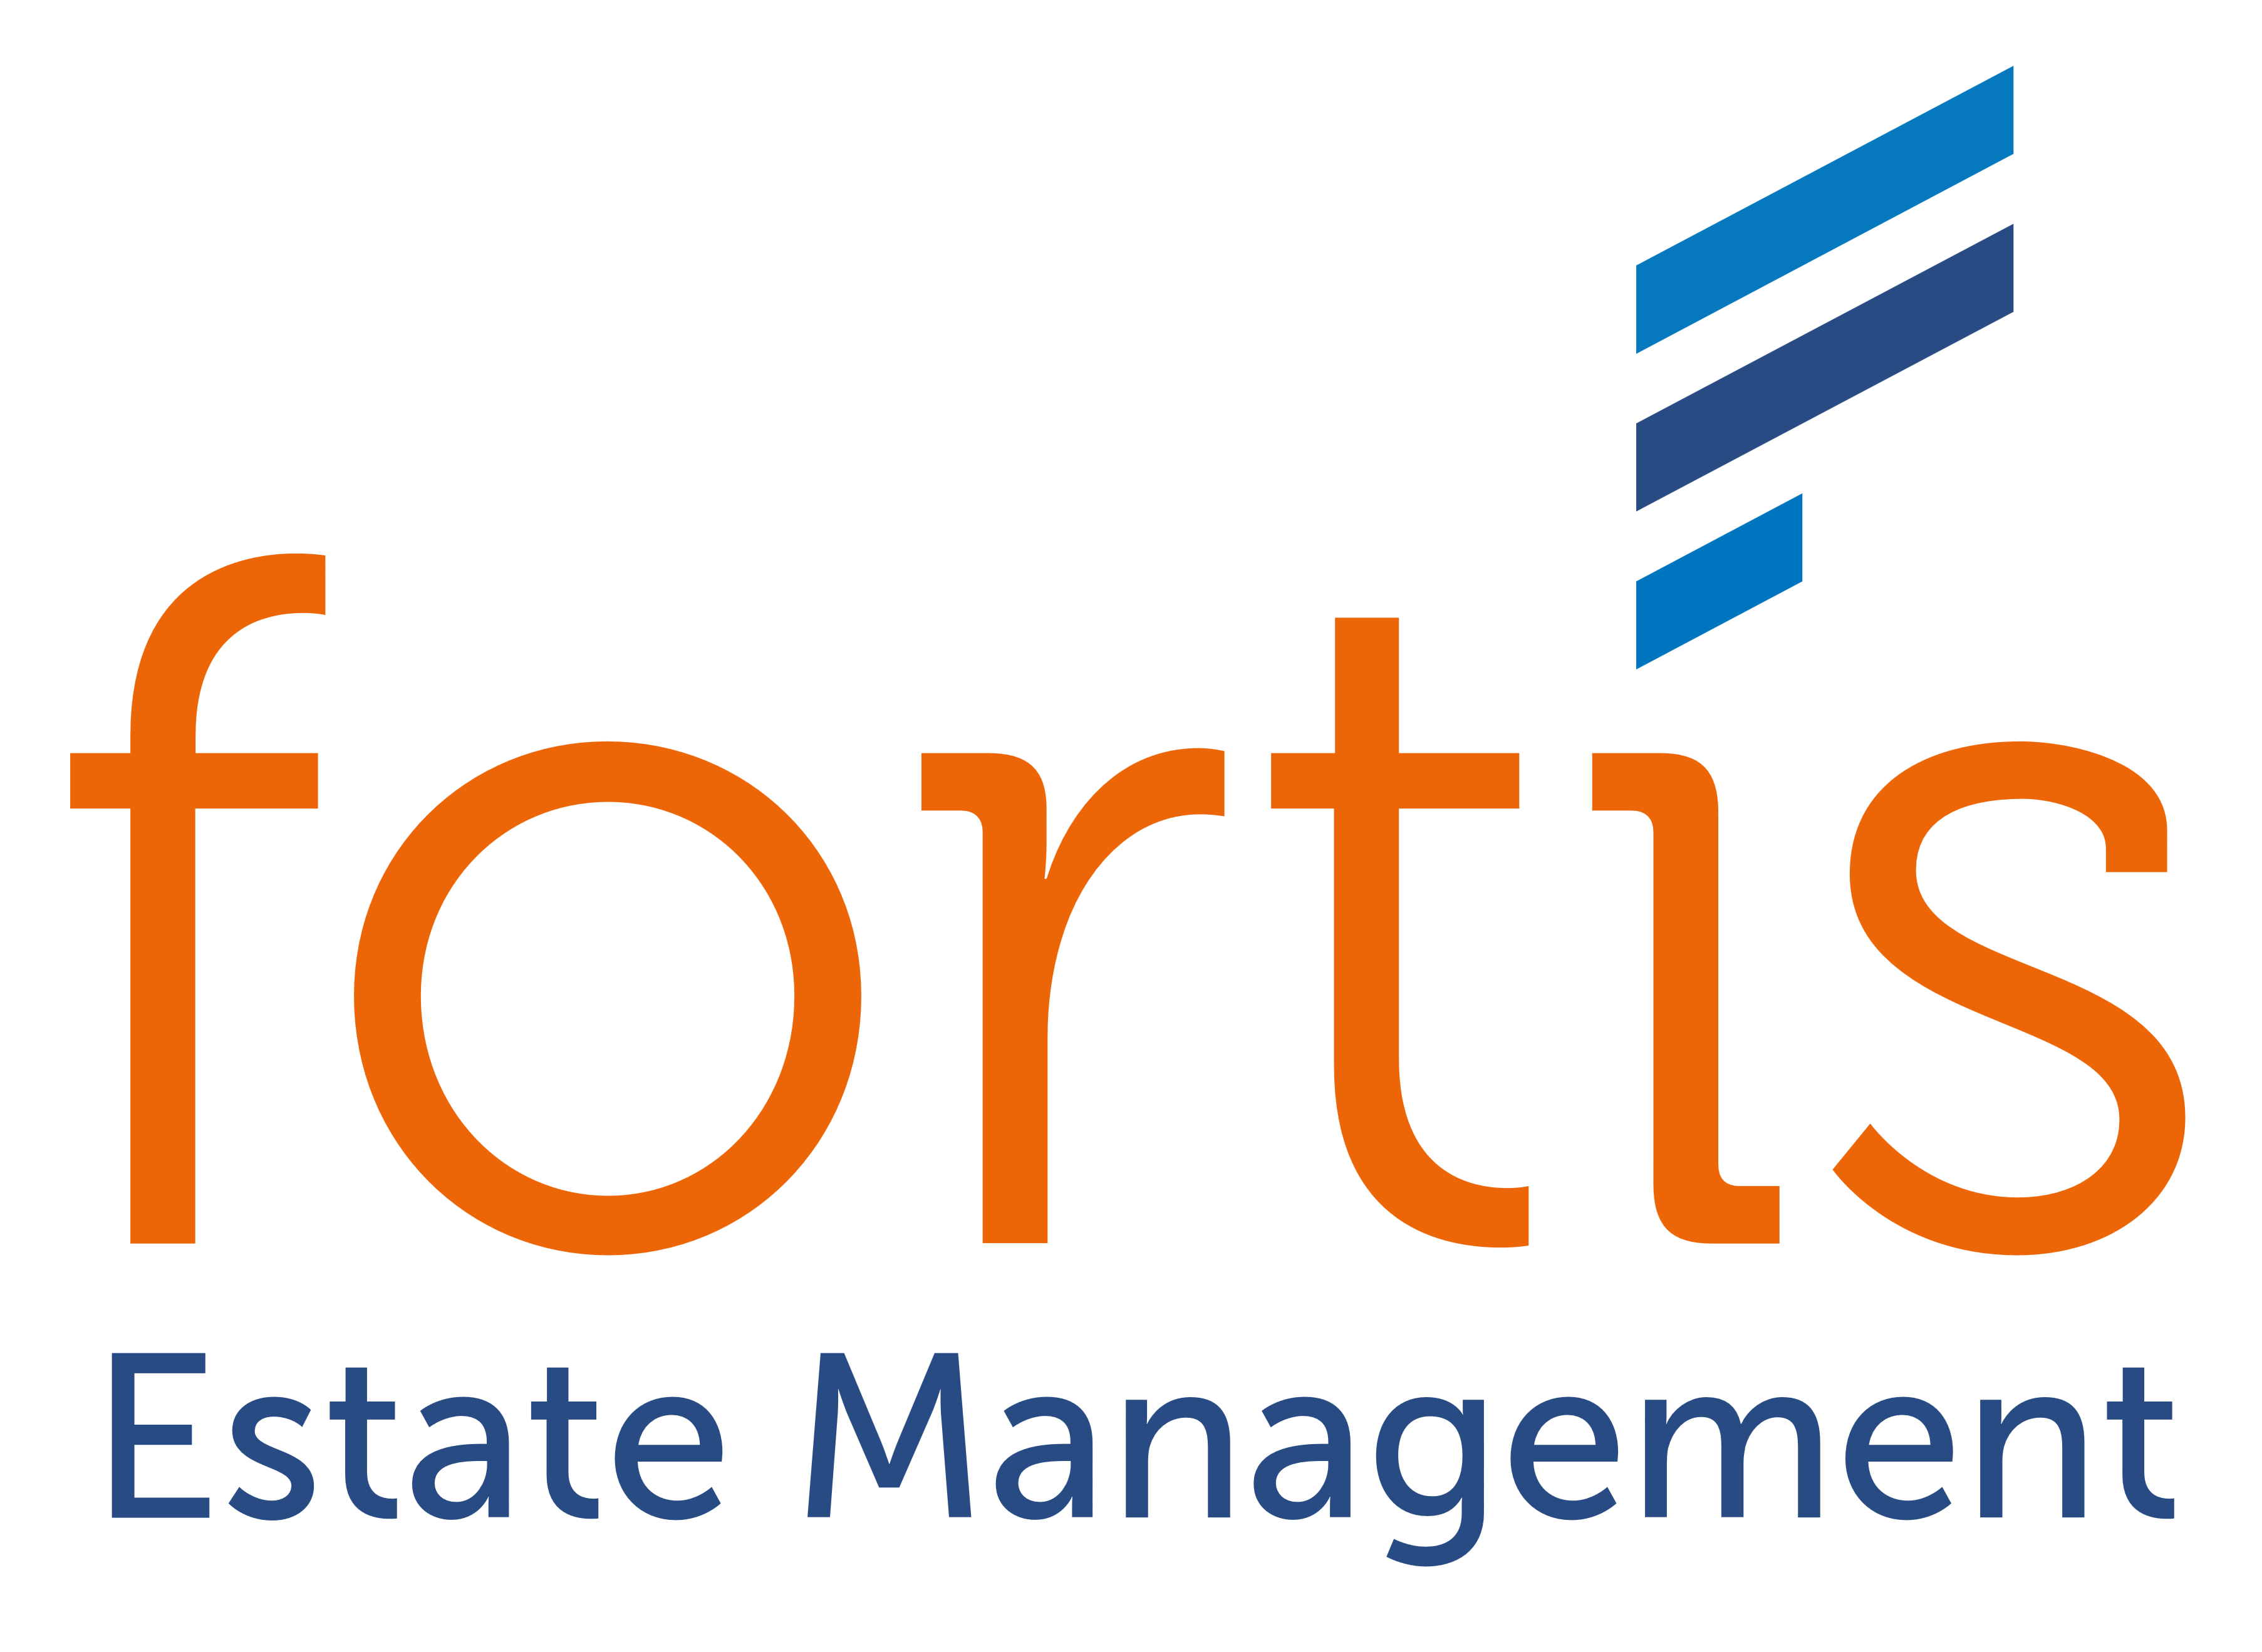 Fortis Logo - Fortis Estate Management – Logos Download